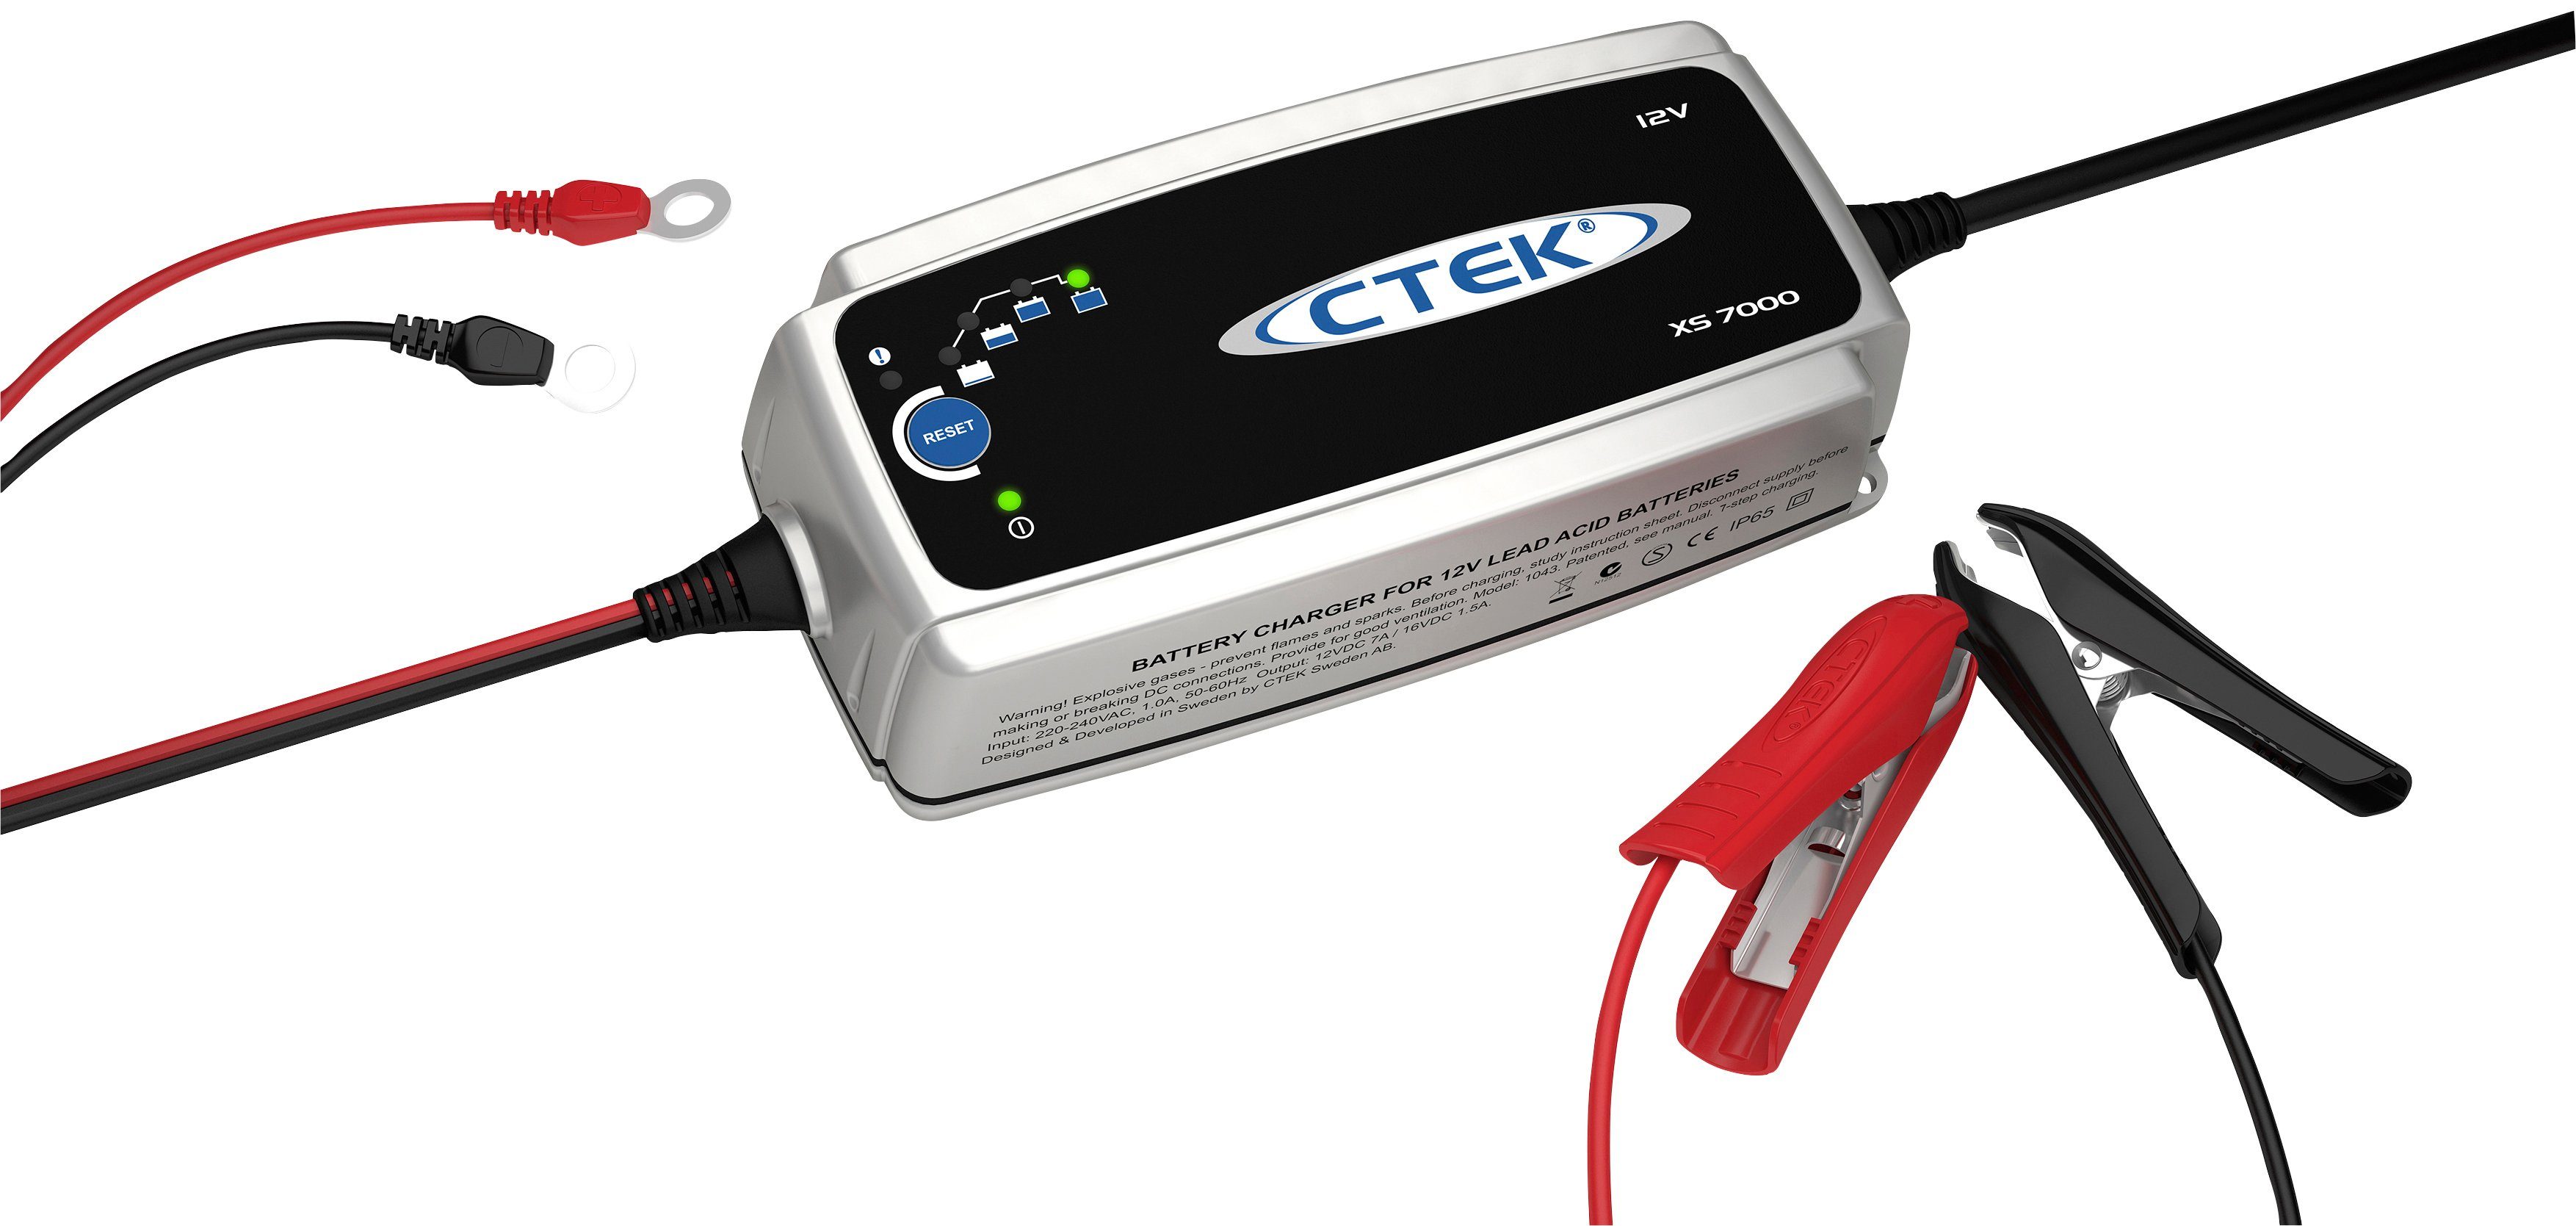 (Patentierte CTEK Entsulfatierungsfunktion) Batterie-Ladegerät XS7000